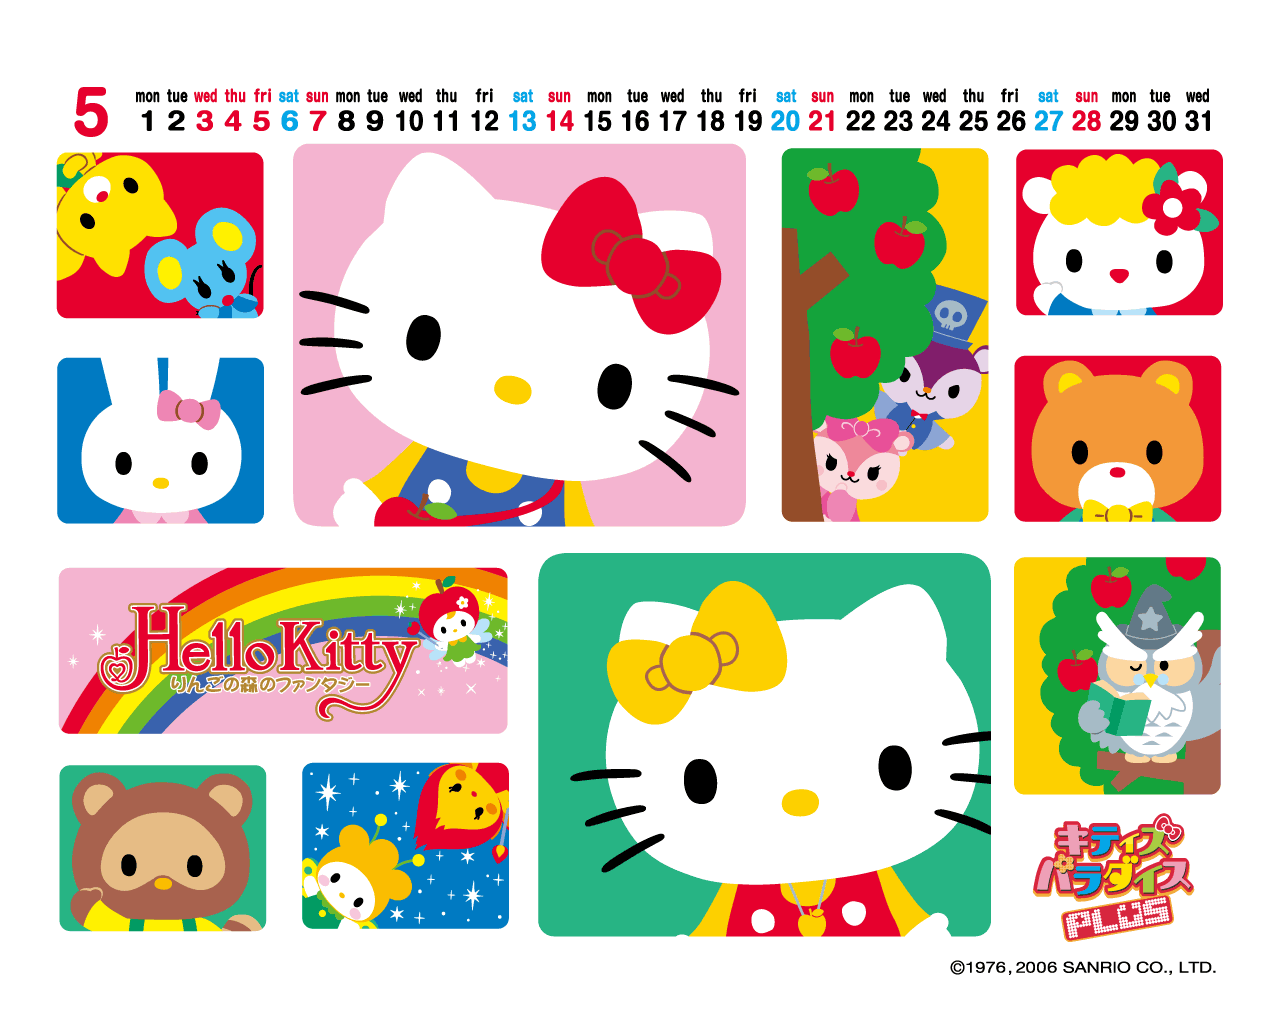 Sanrio - Sanrio Wallpaper (2359139) - Fanpop